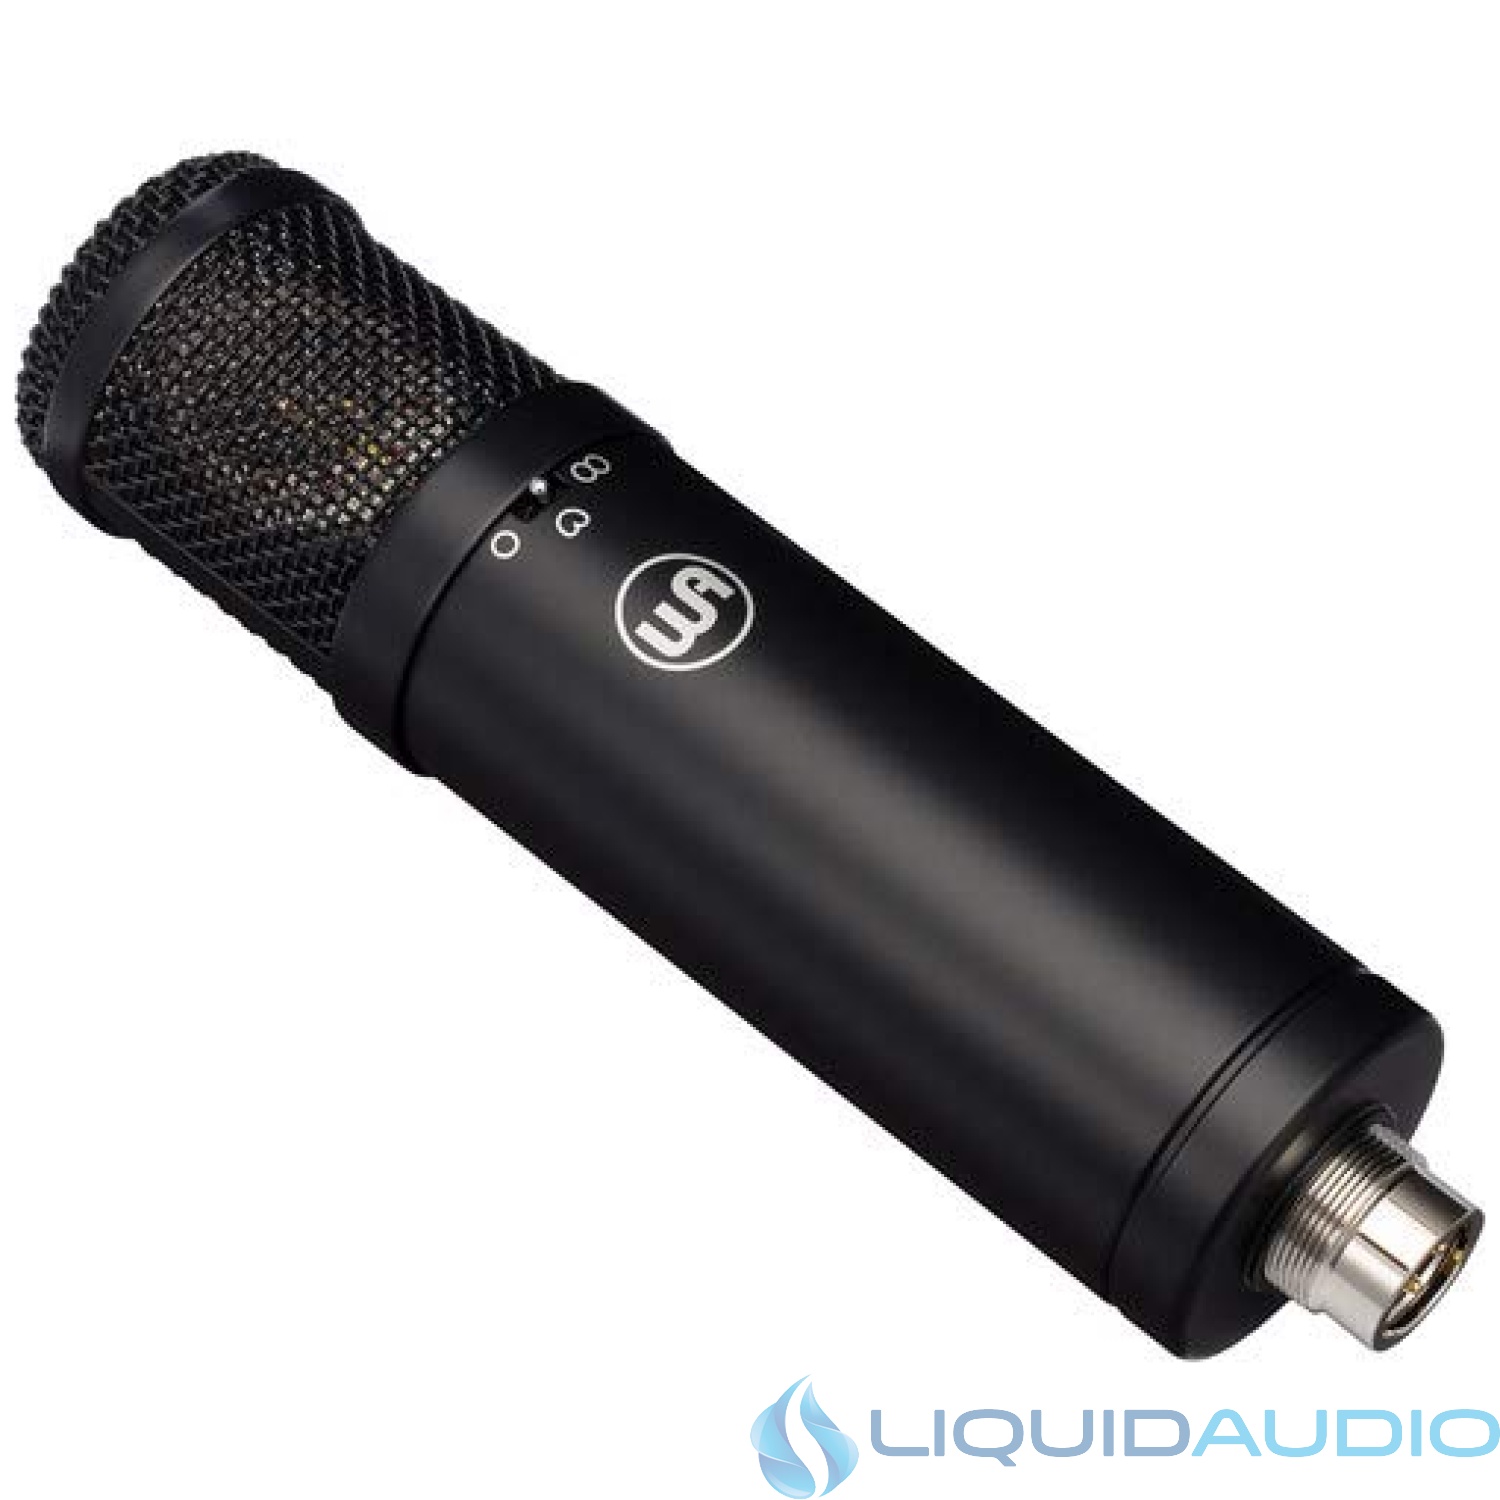 Warm Audio WA-47Jr Large-diaphragm Condenser Microphone - Black